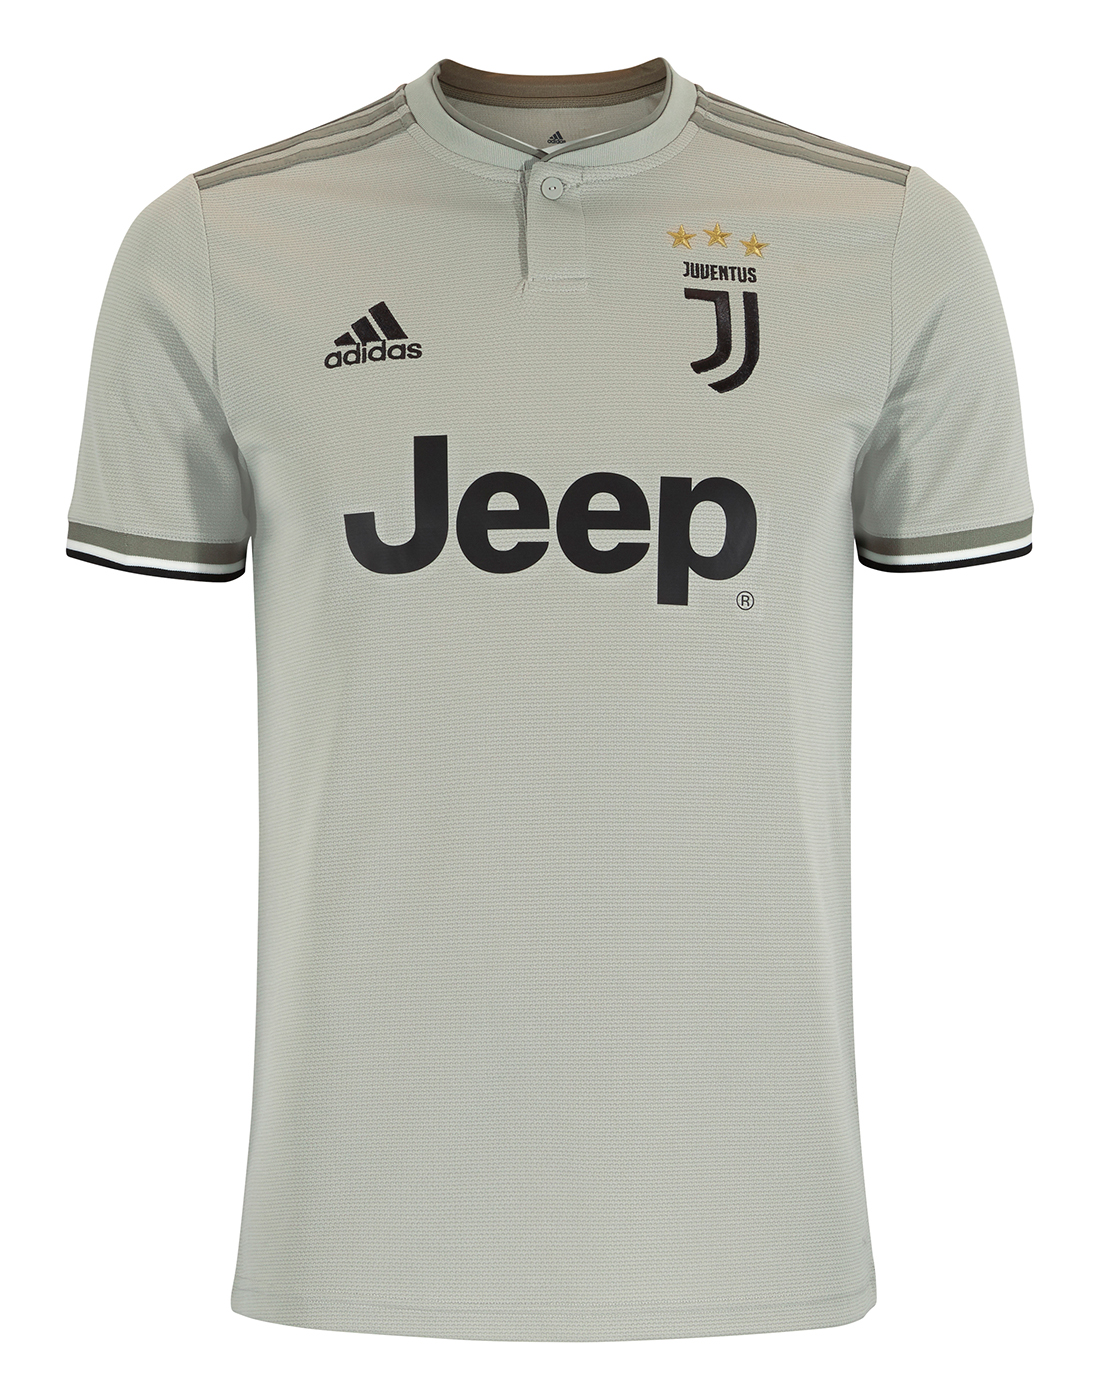 Juventus 18/19 Away Jersey | adidas | Life Style Sports